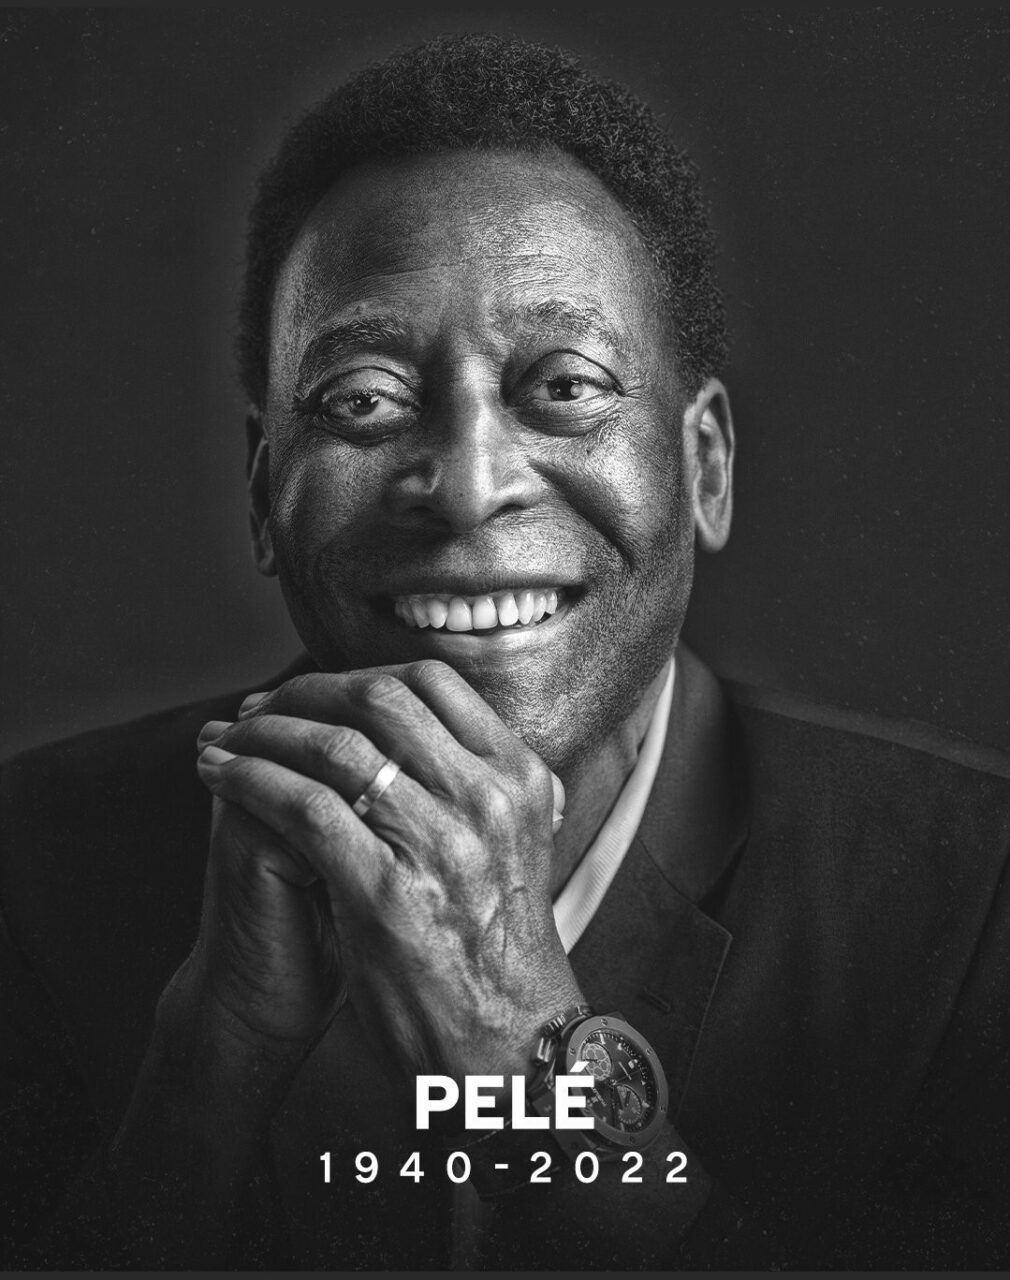 Football Legend Pele Dies After Battle With Colon Cancer